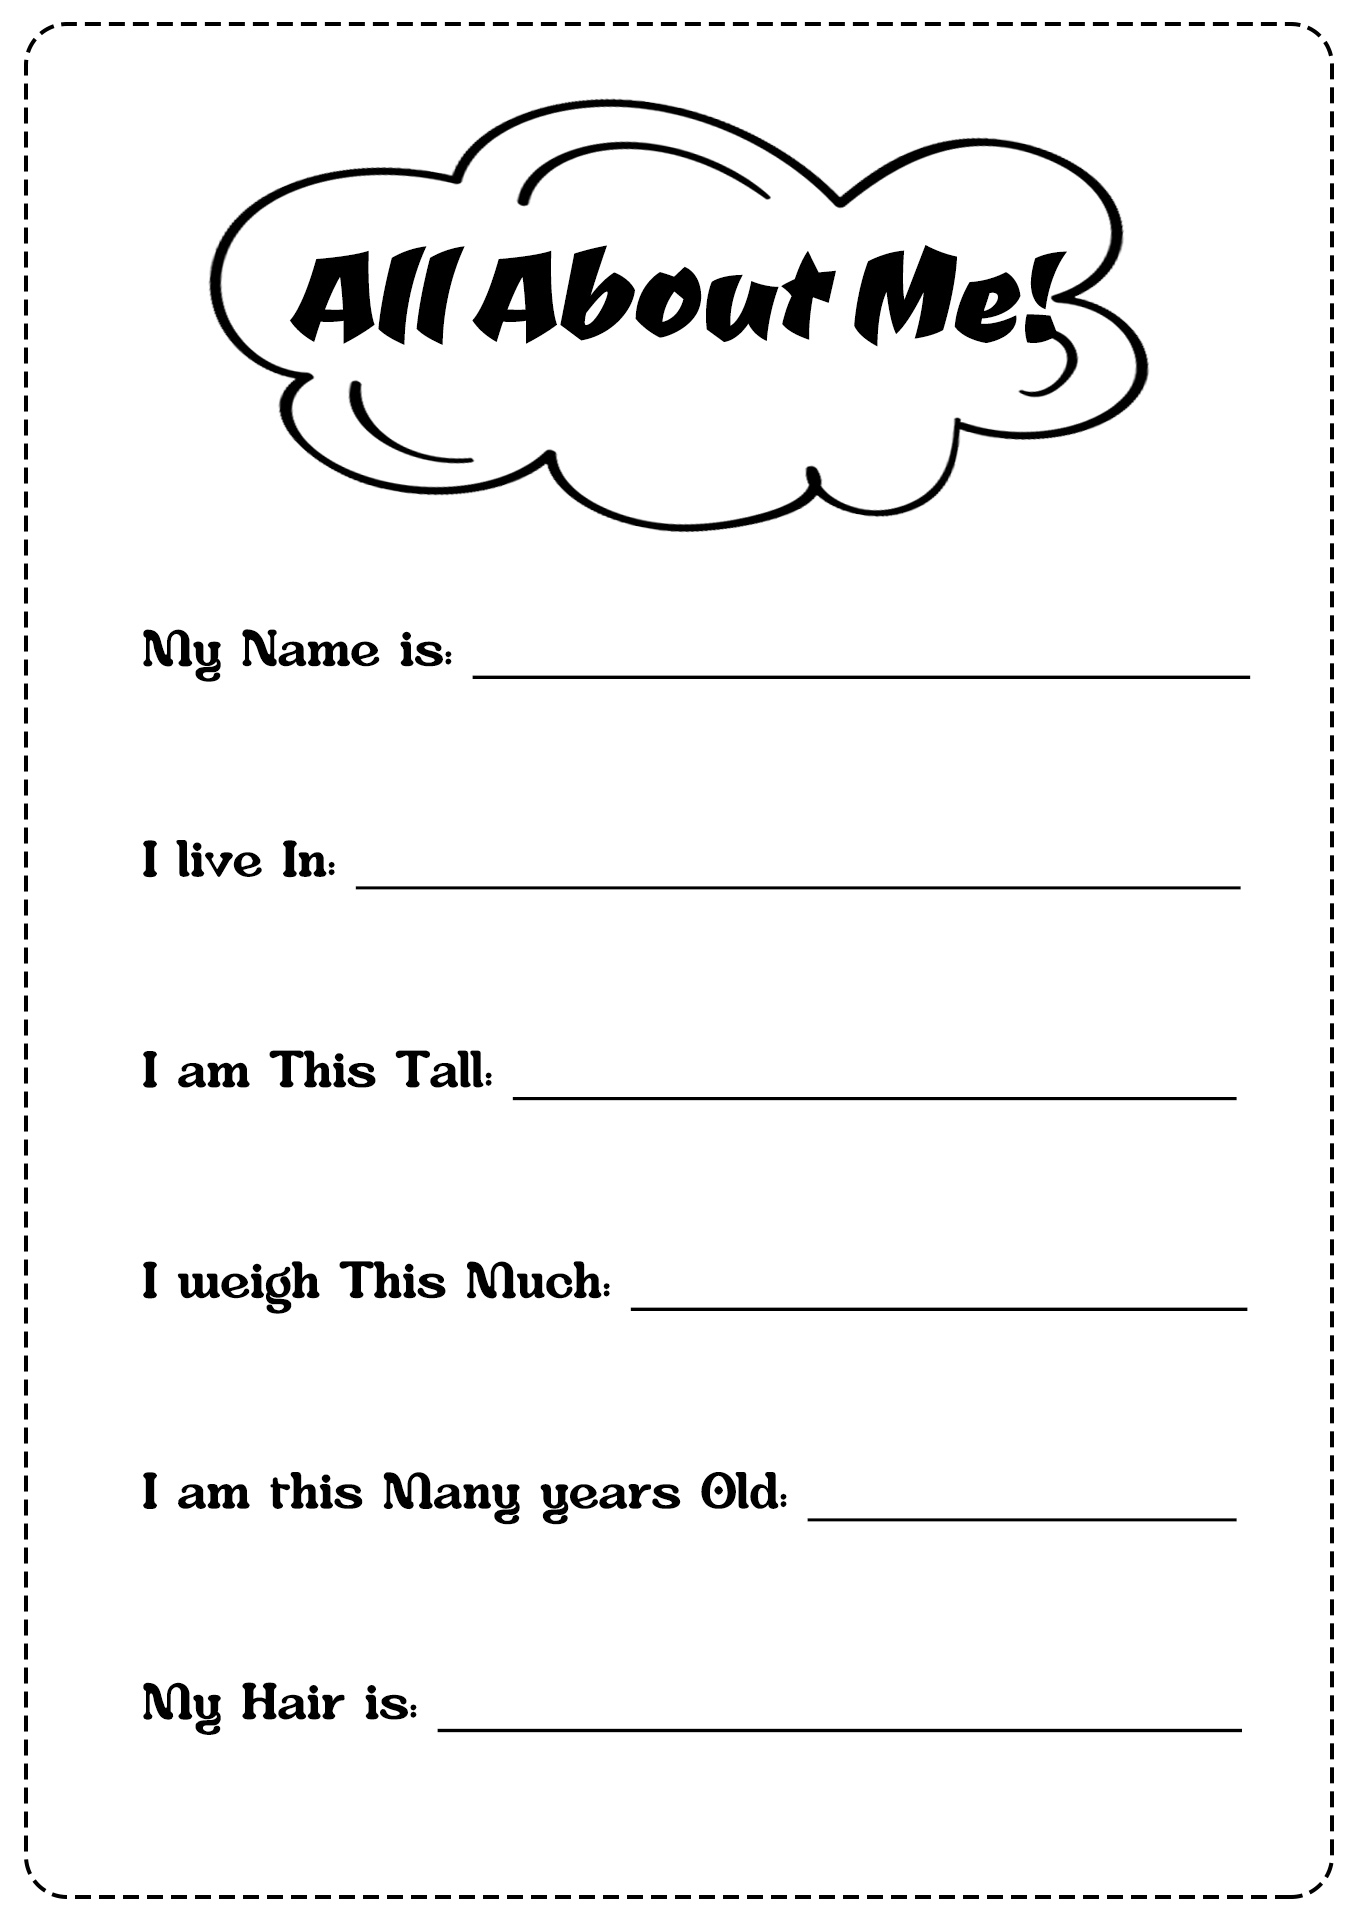 All About Me Preschool Worksheet